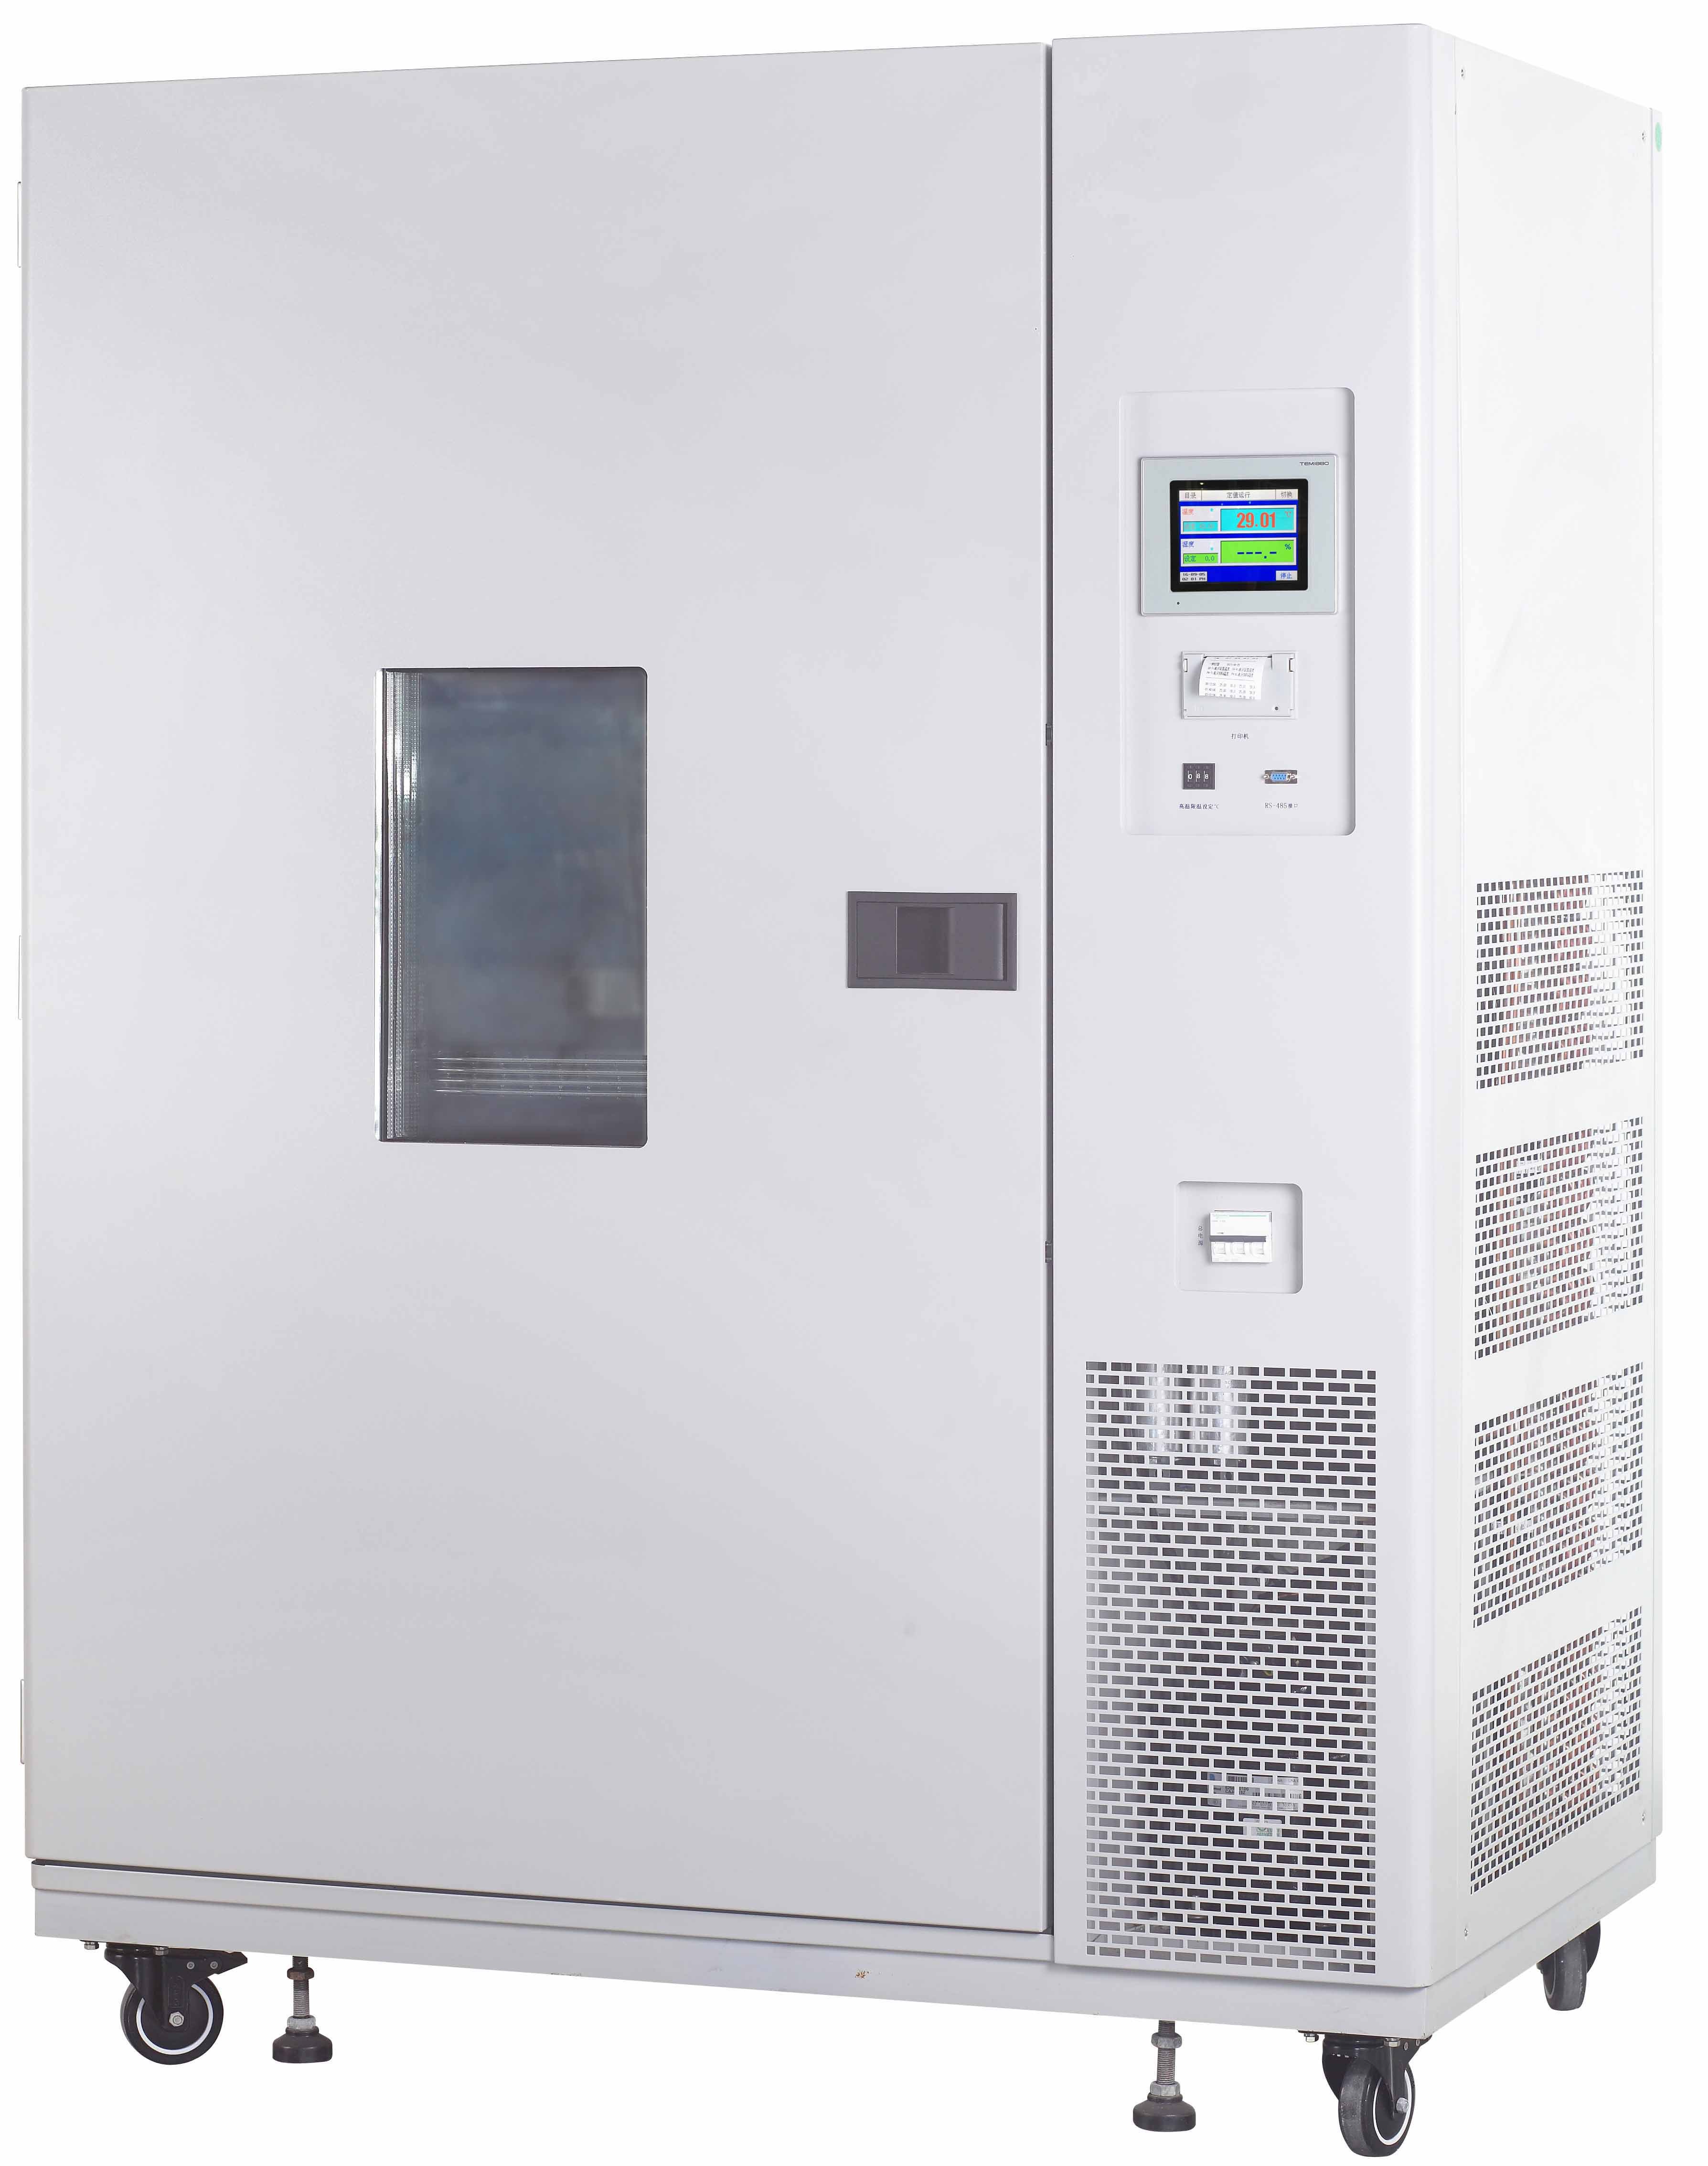 Edeson大型药品稳定性试验箱 EHC-800LP宁波艾德生仪器有限公司